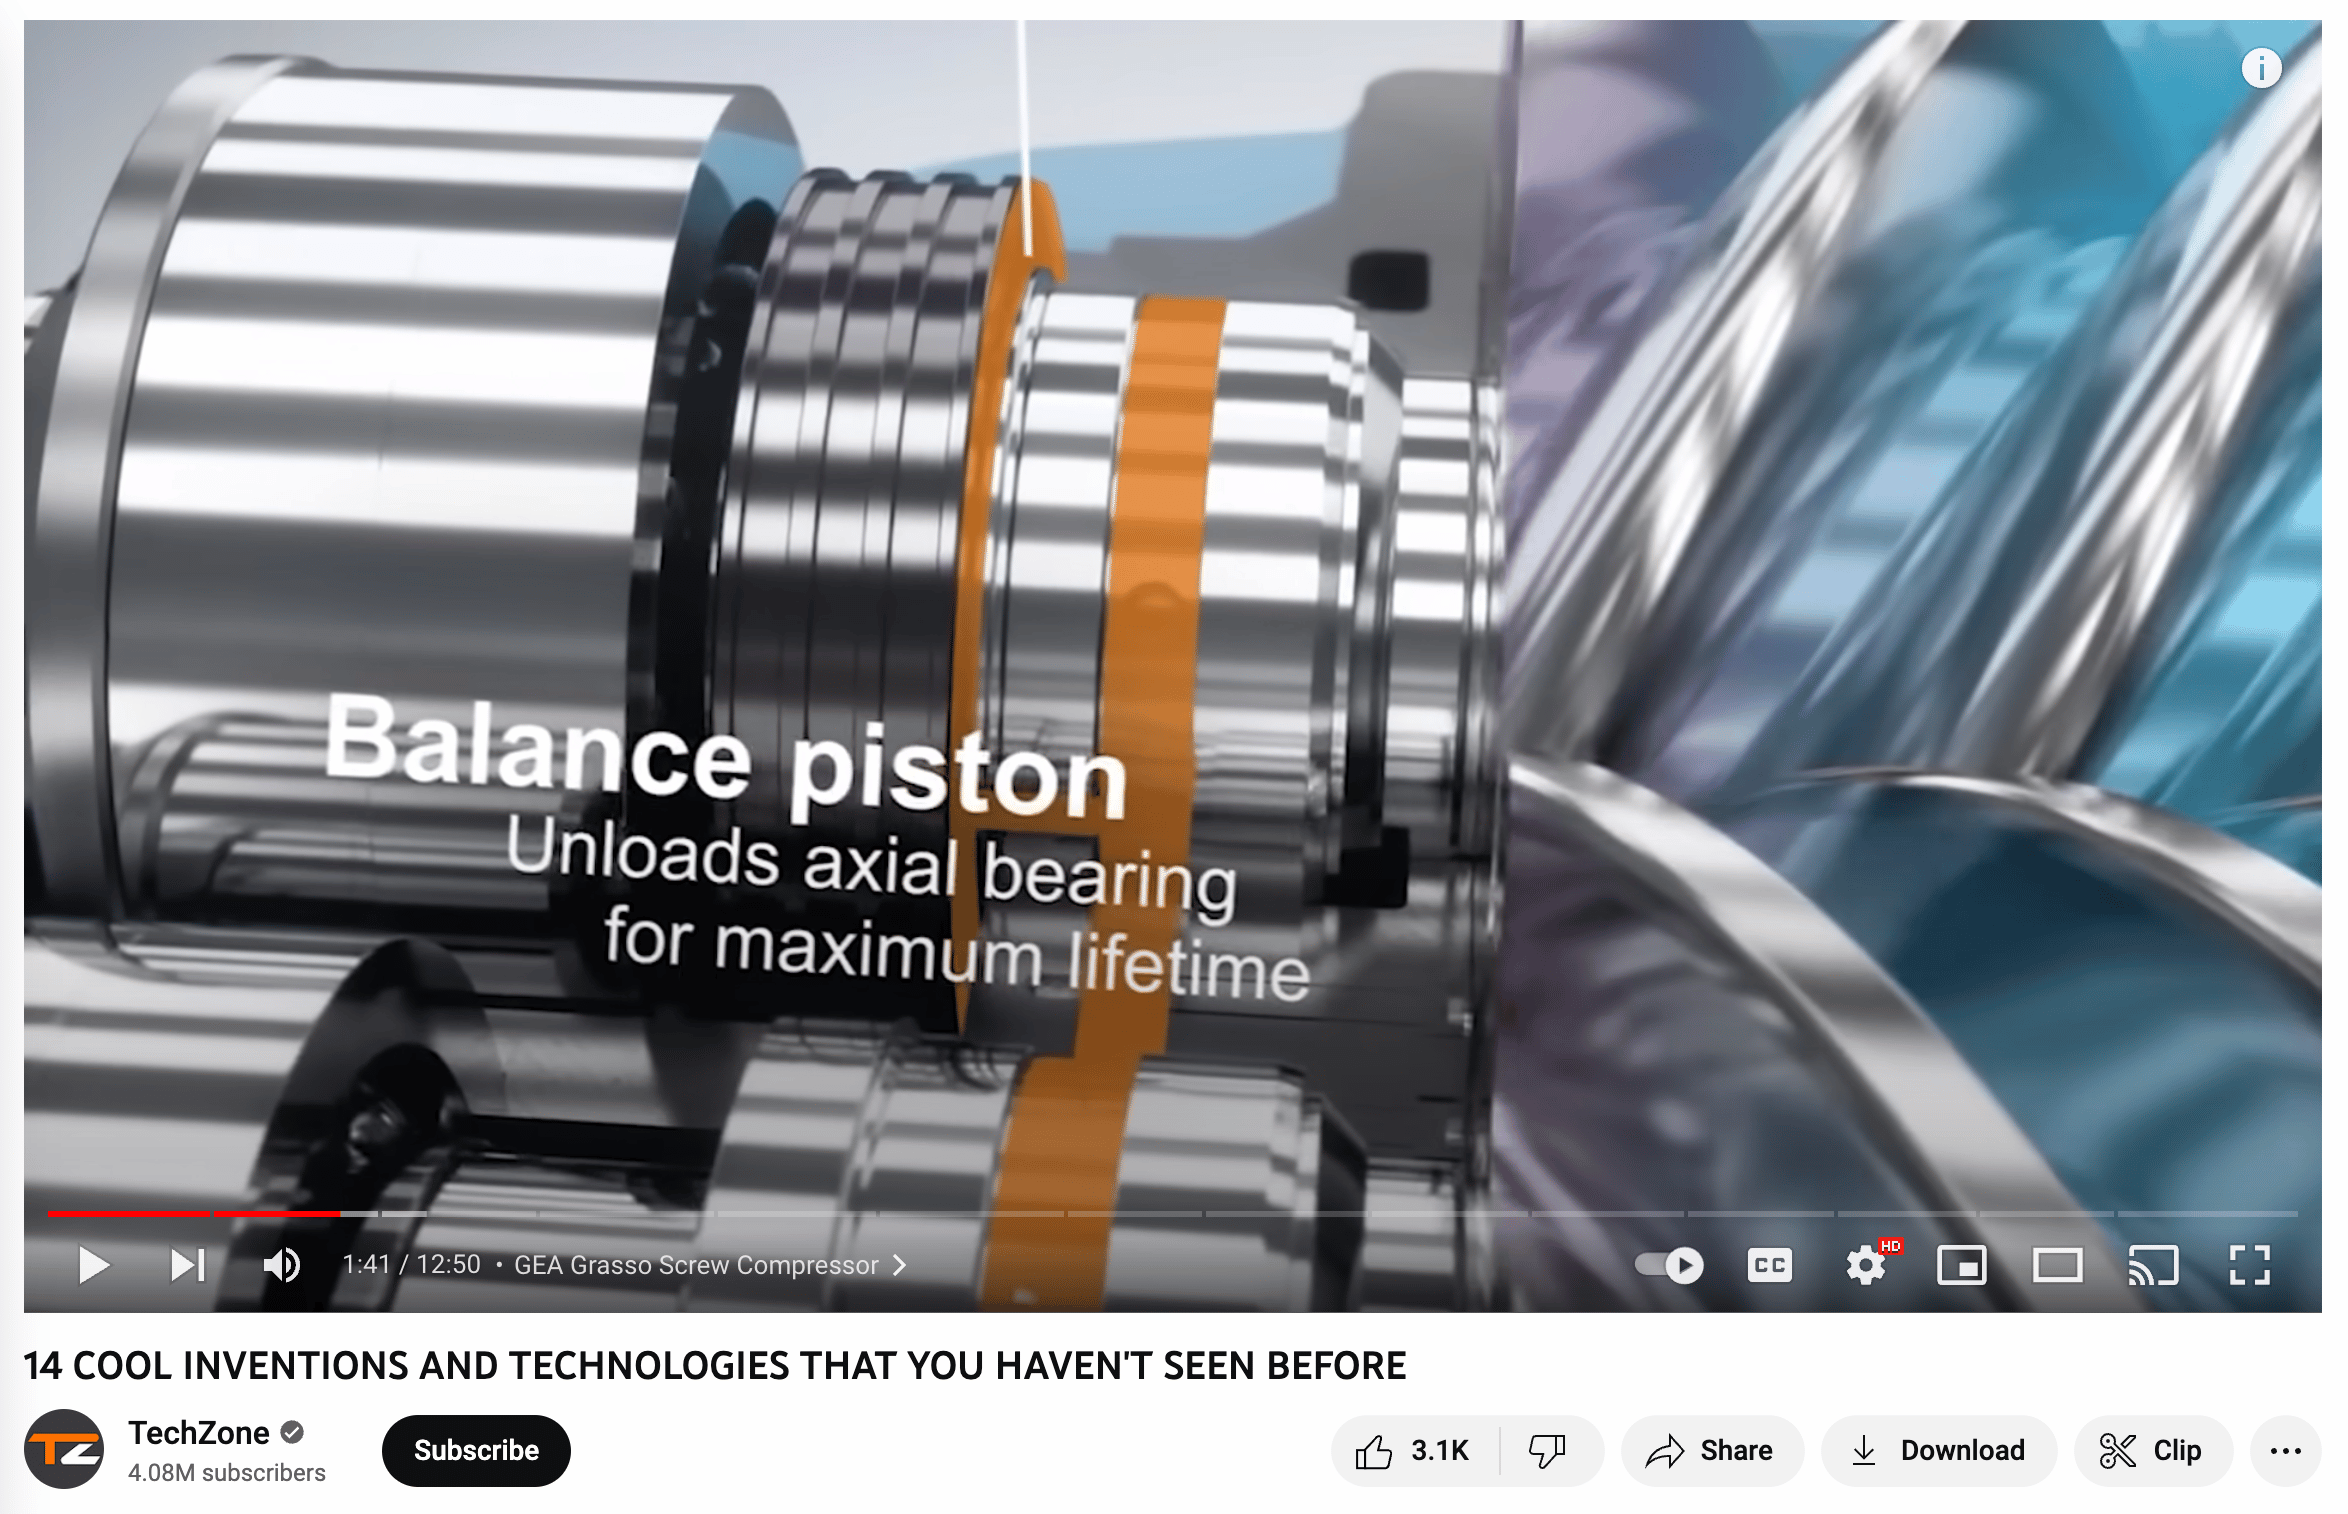 tech zone technology review video showing balance piston